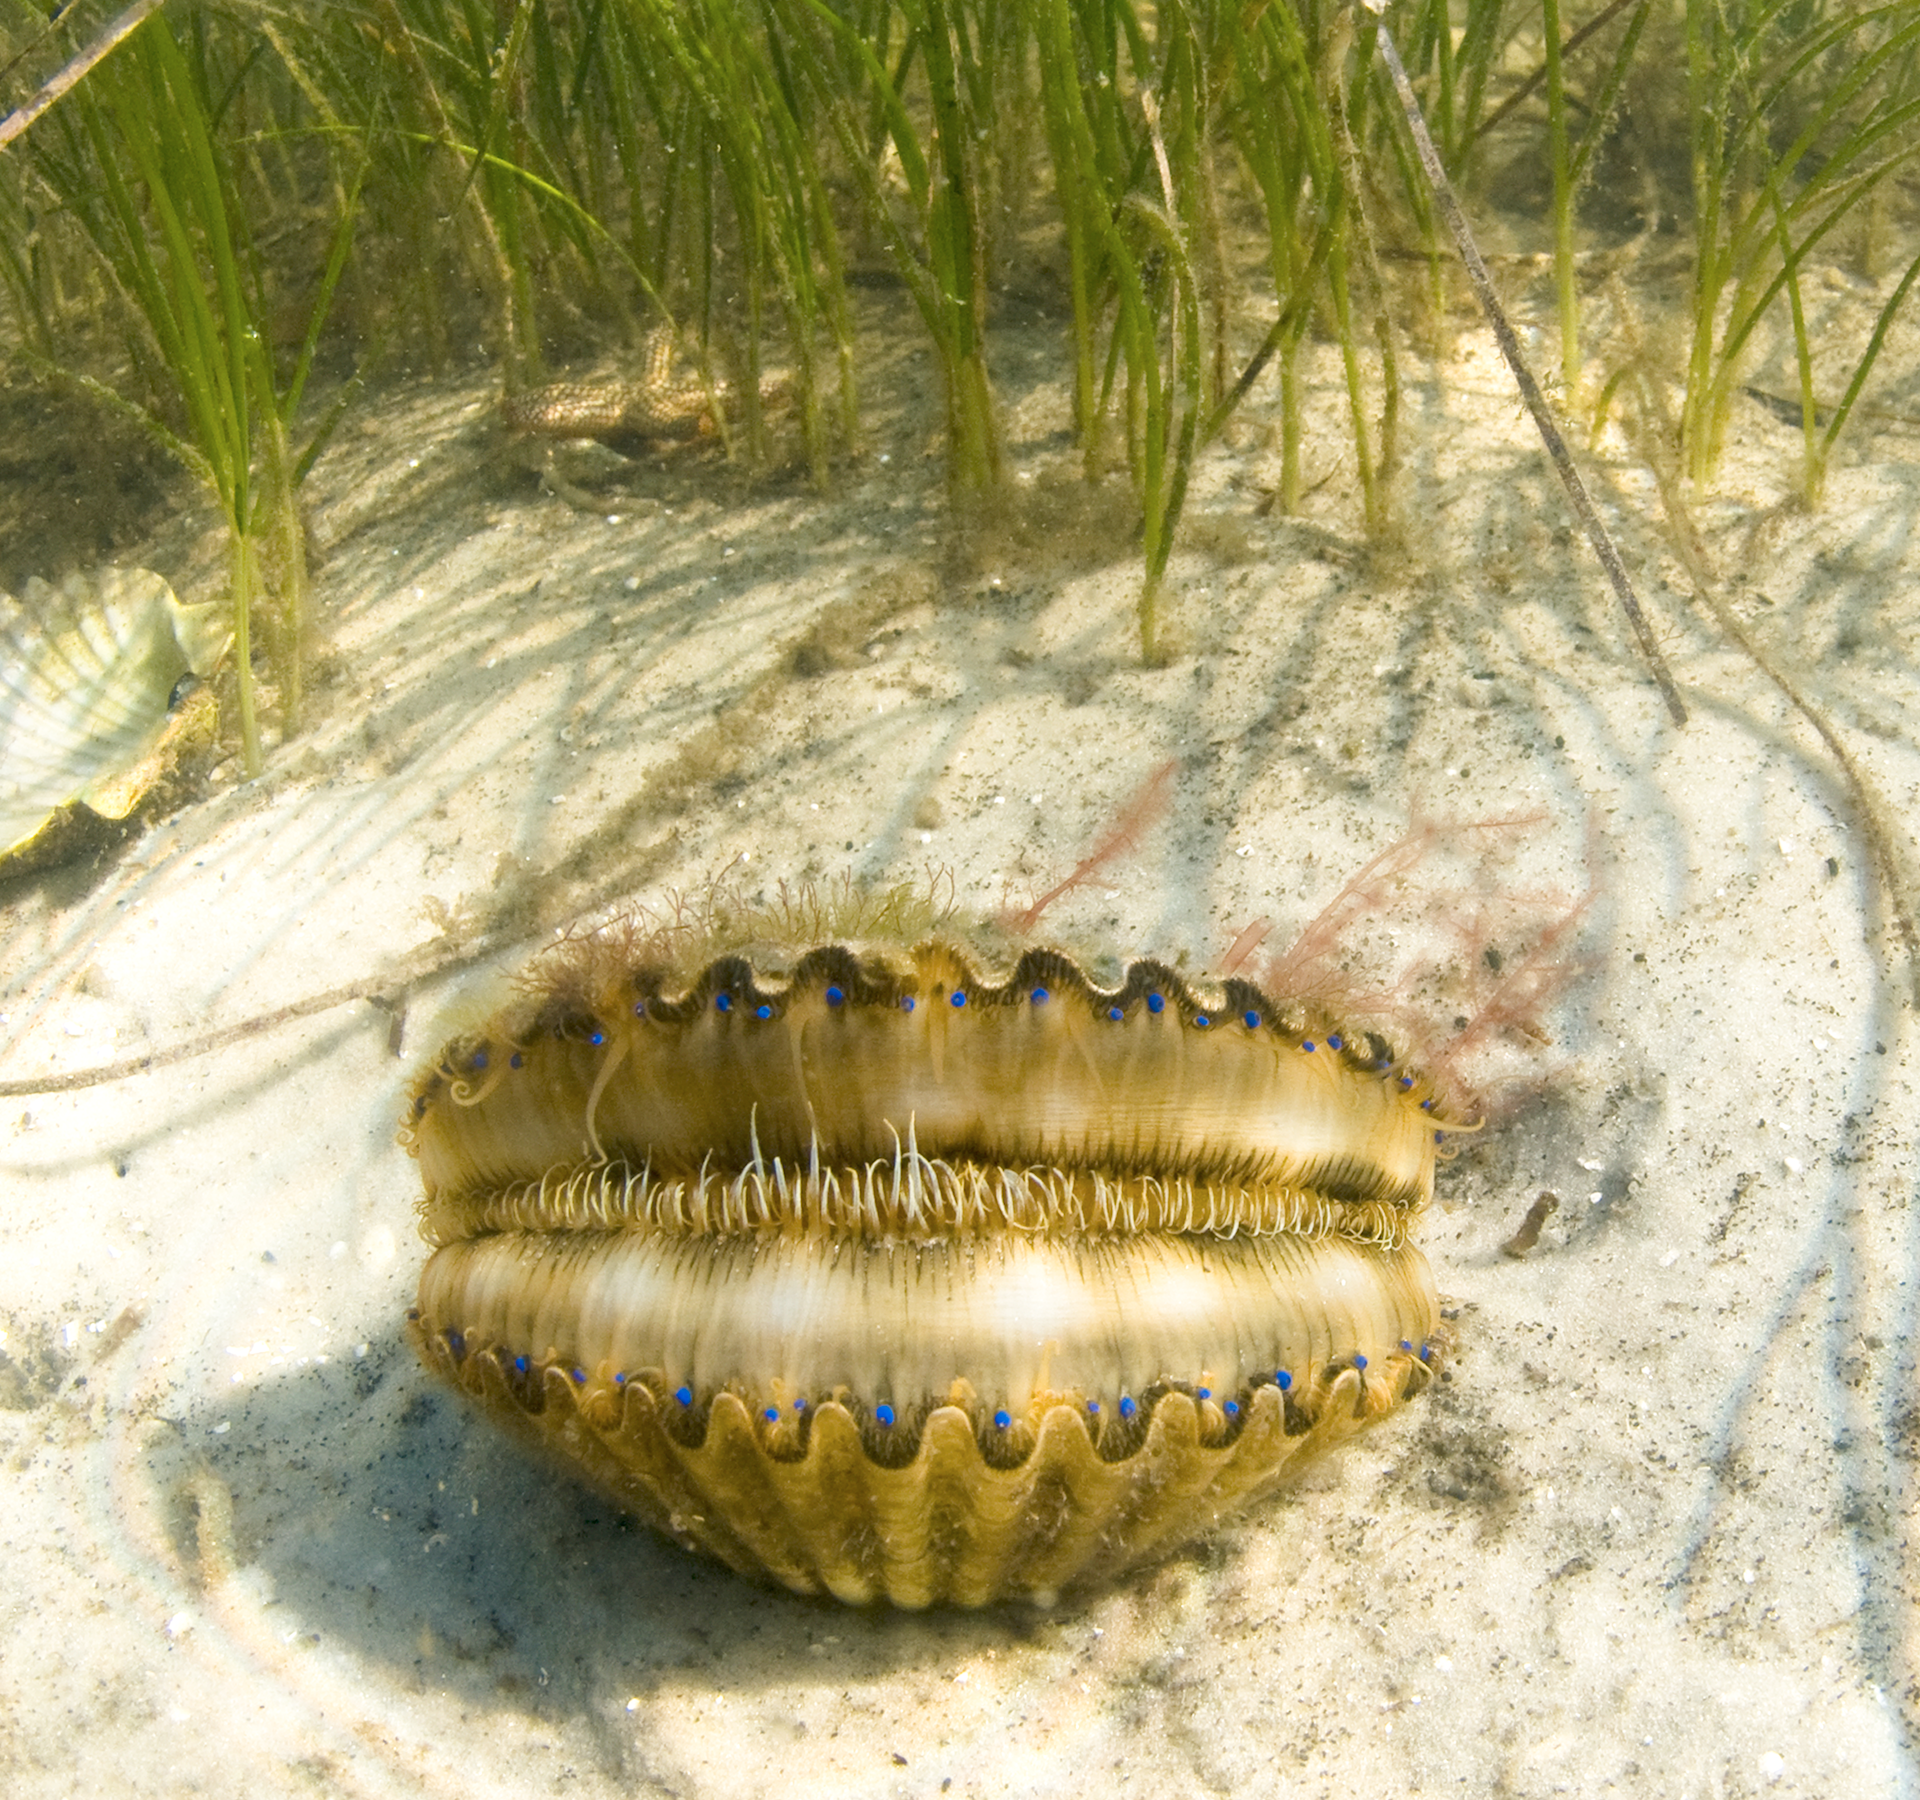 A closeup of a scallop underwater